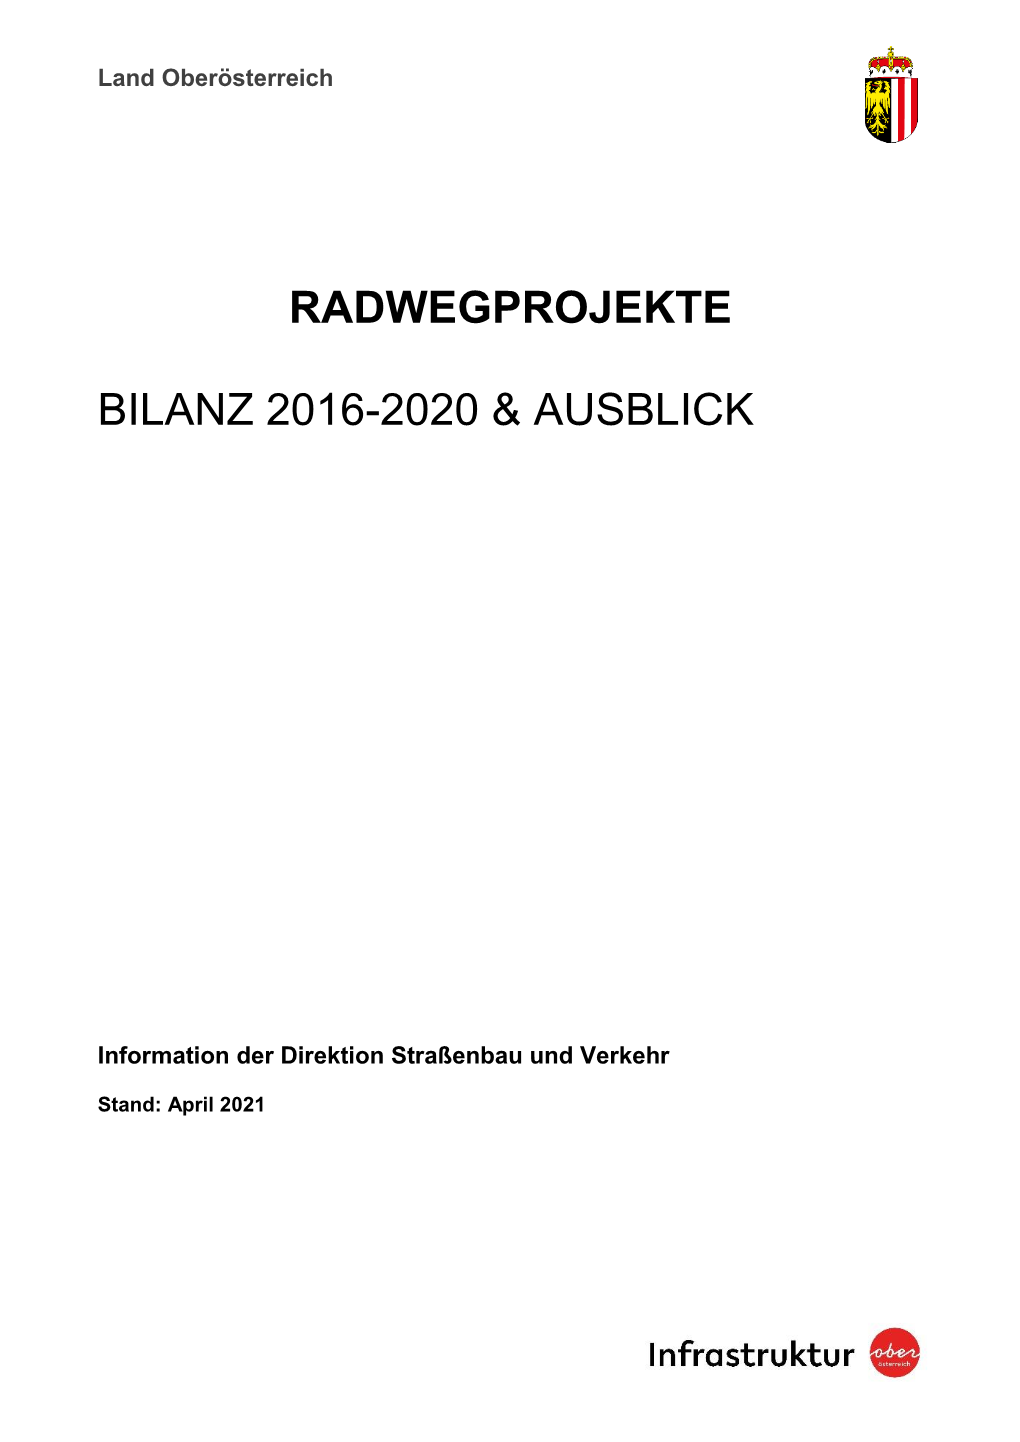 Radwegprojekte Bilanz 2016-2020 & Ausblick